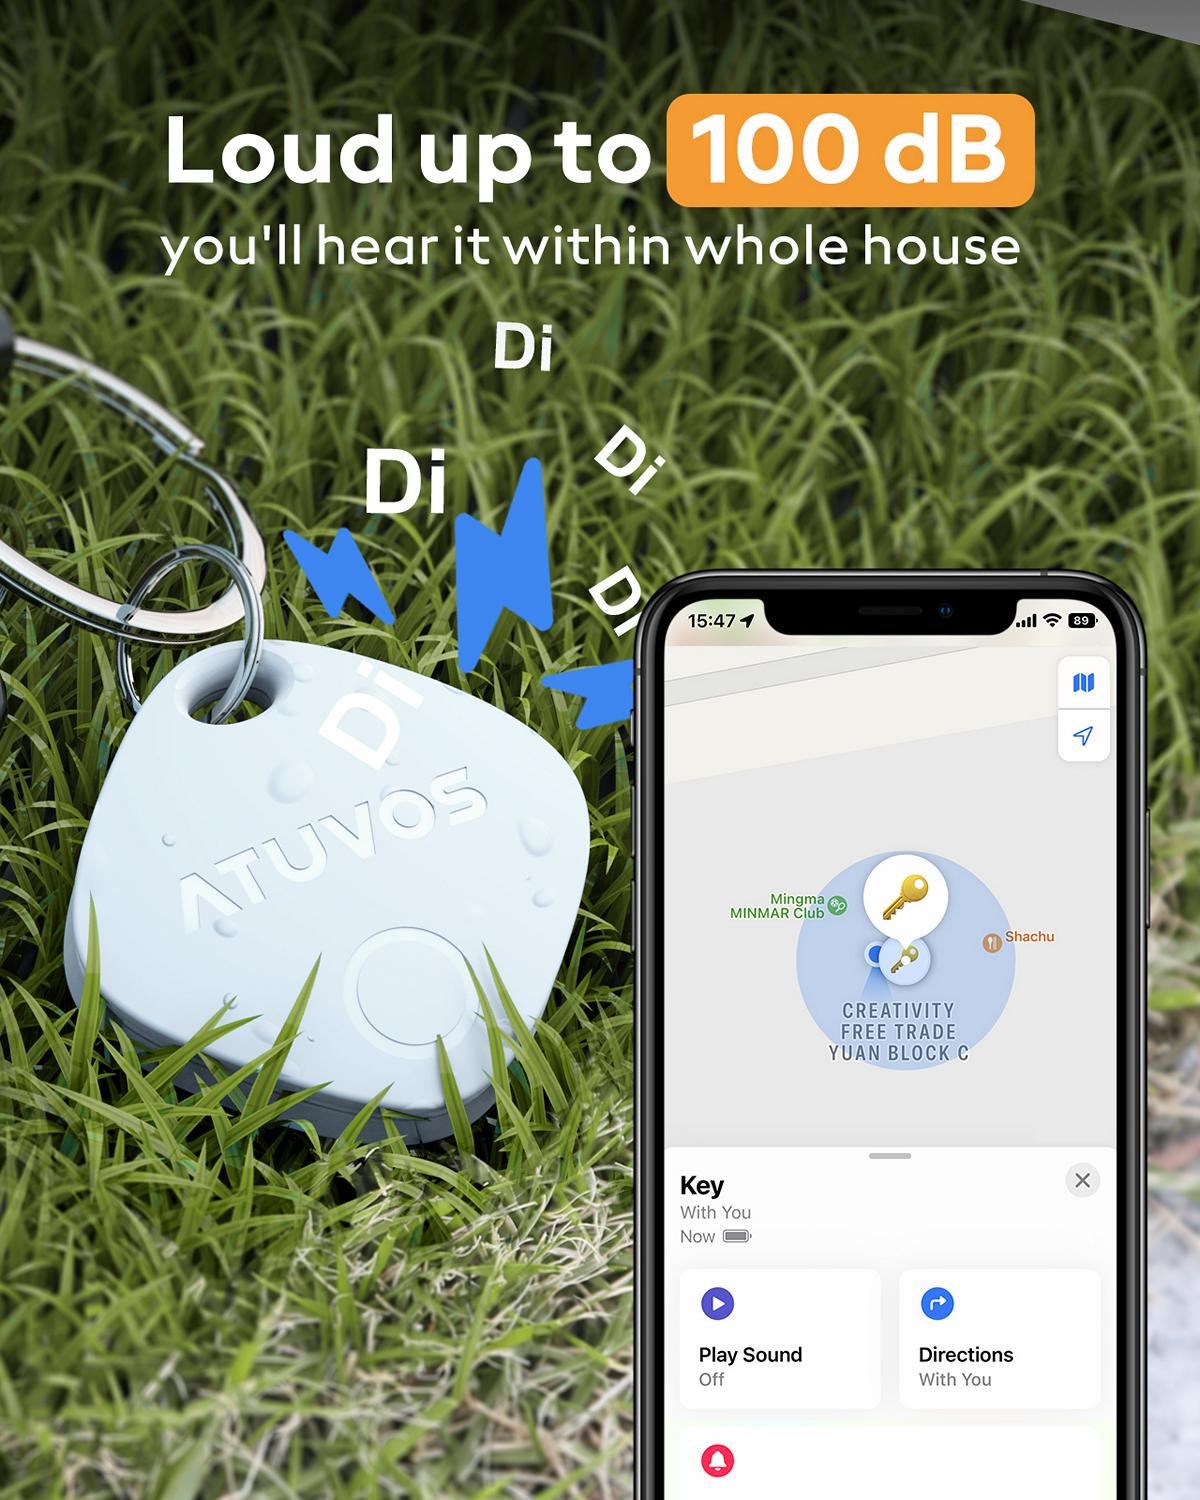 ATUVOS White Item Finder 2PCS (iOS Only)